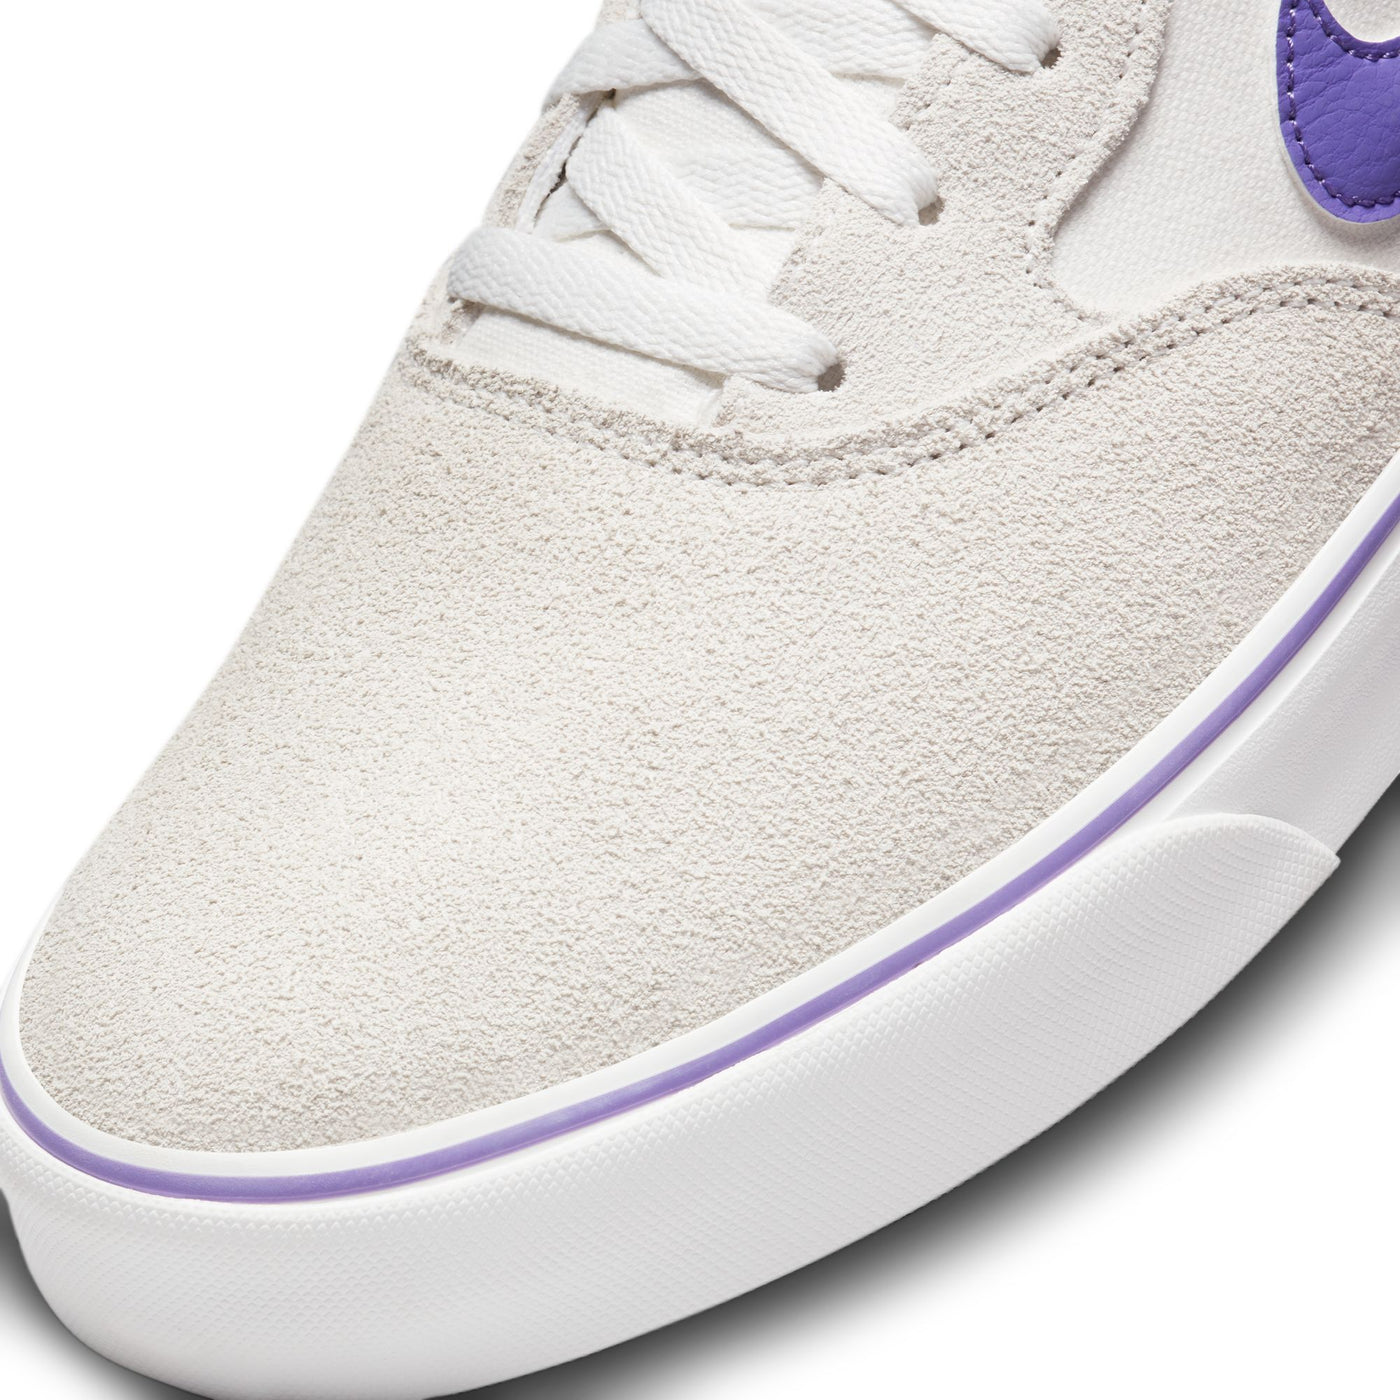 Nike SB 3493 Chron 2 Shoe - Summit White/Summit White/Sanddrift/Action Grape